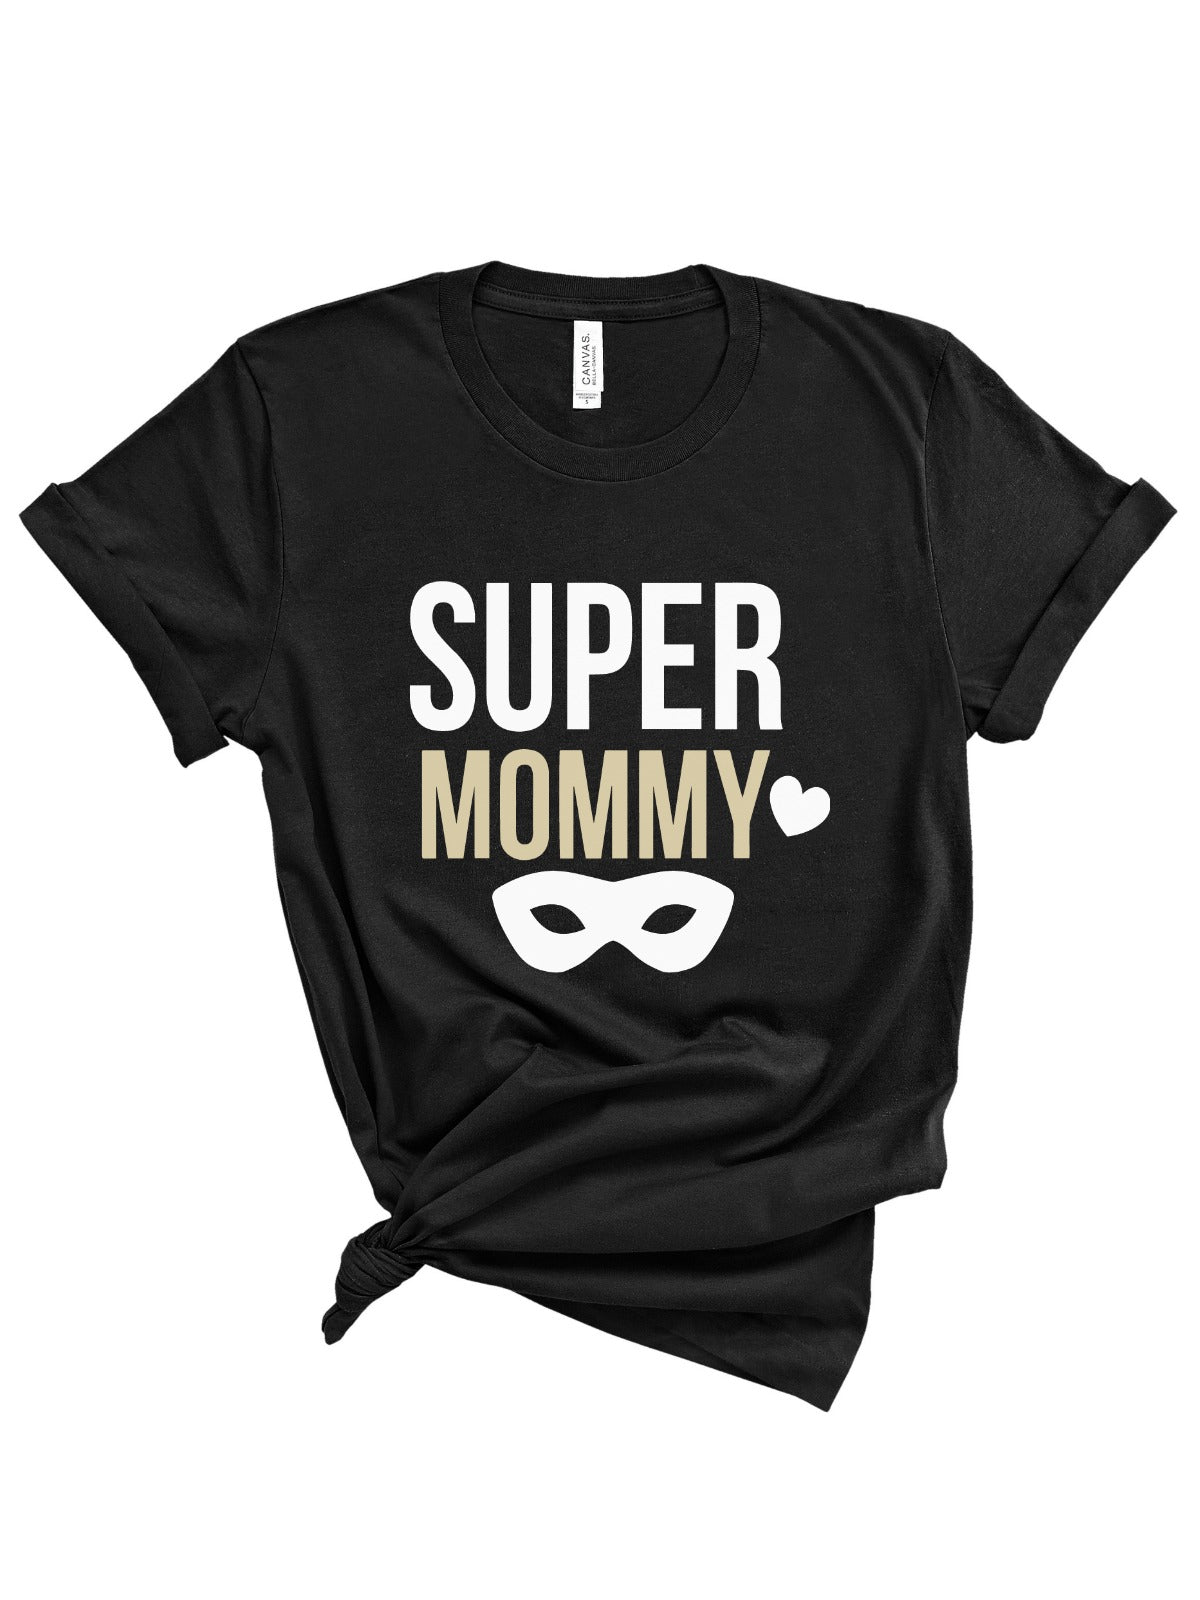 Super Mommy Women's Tee